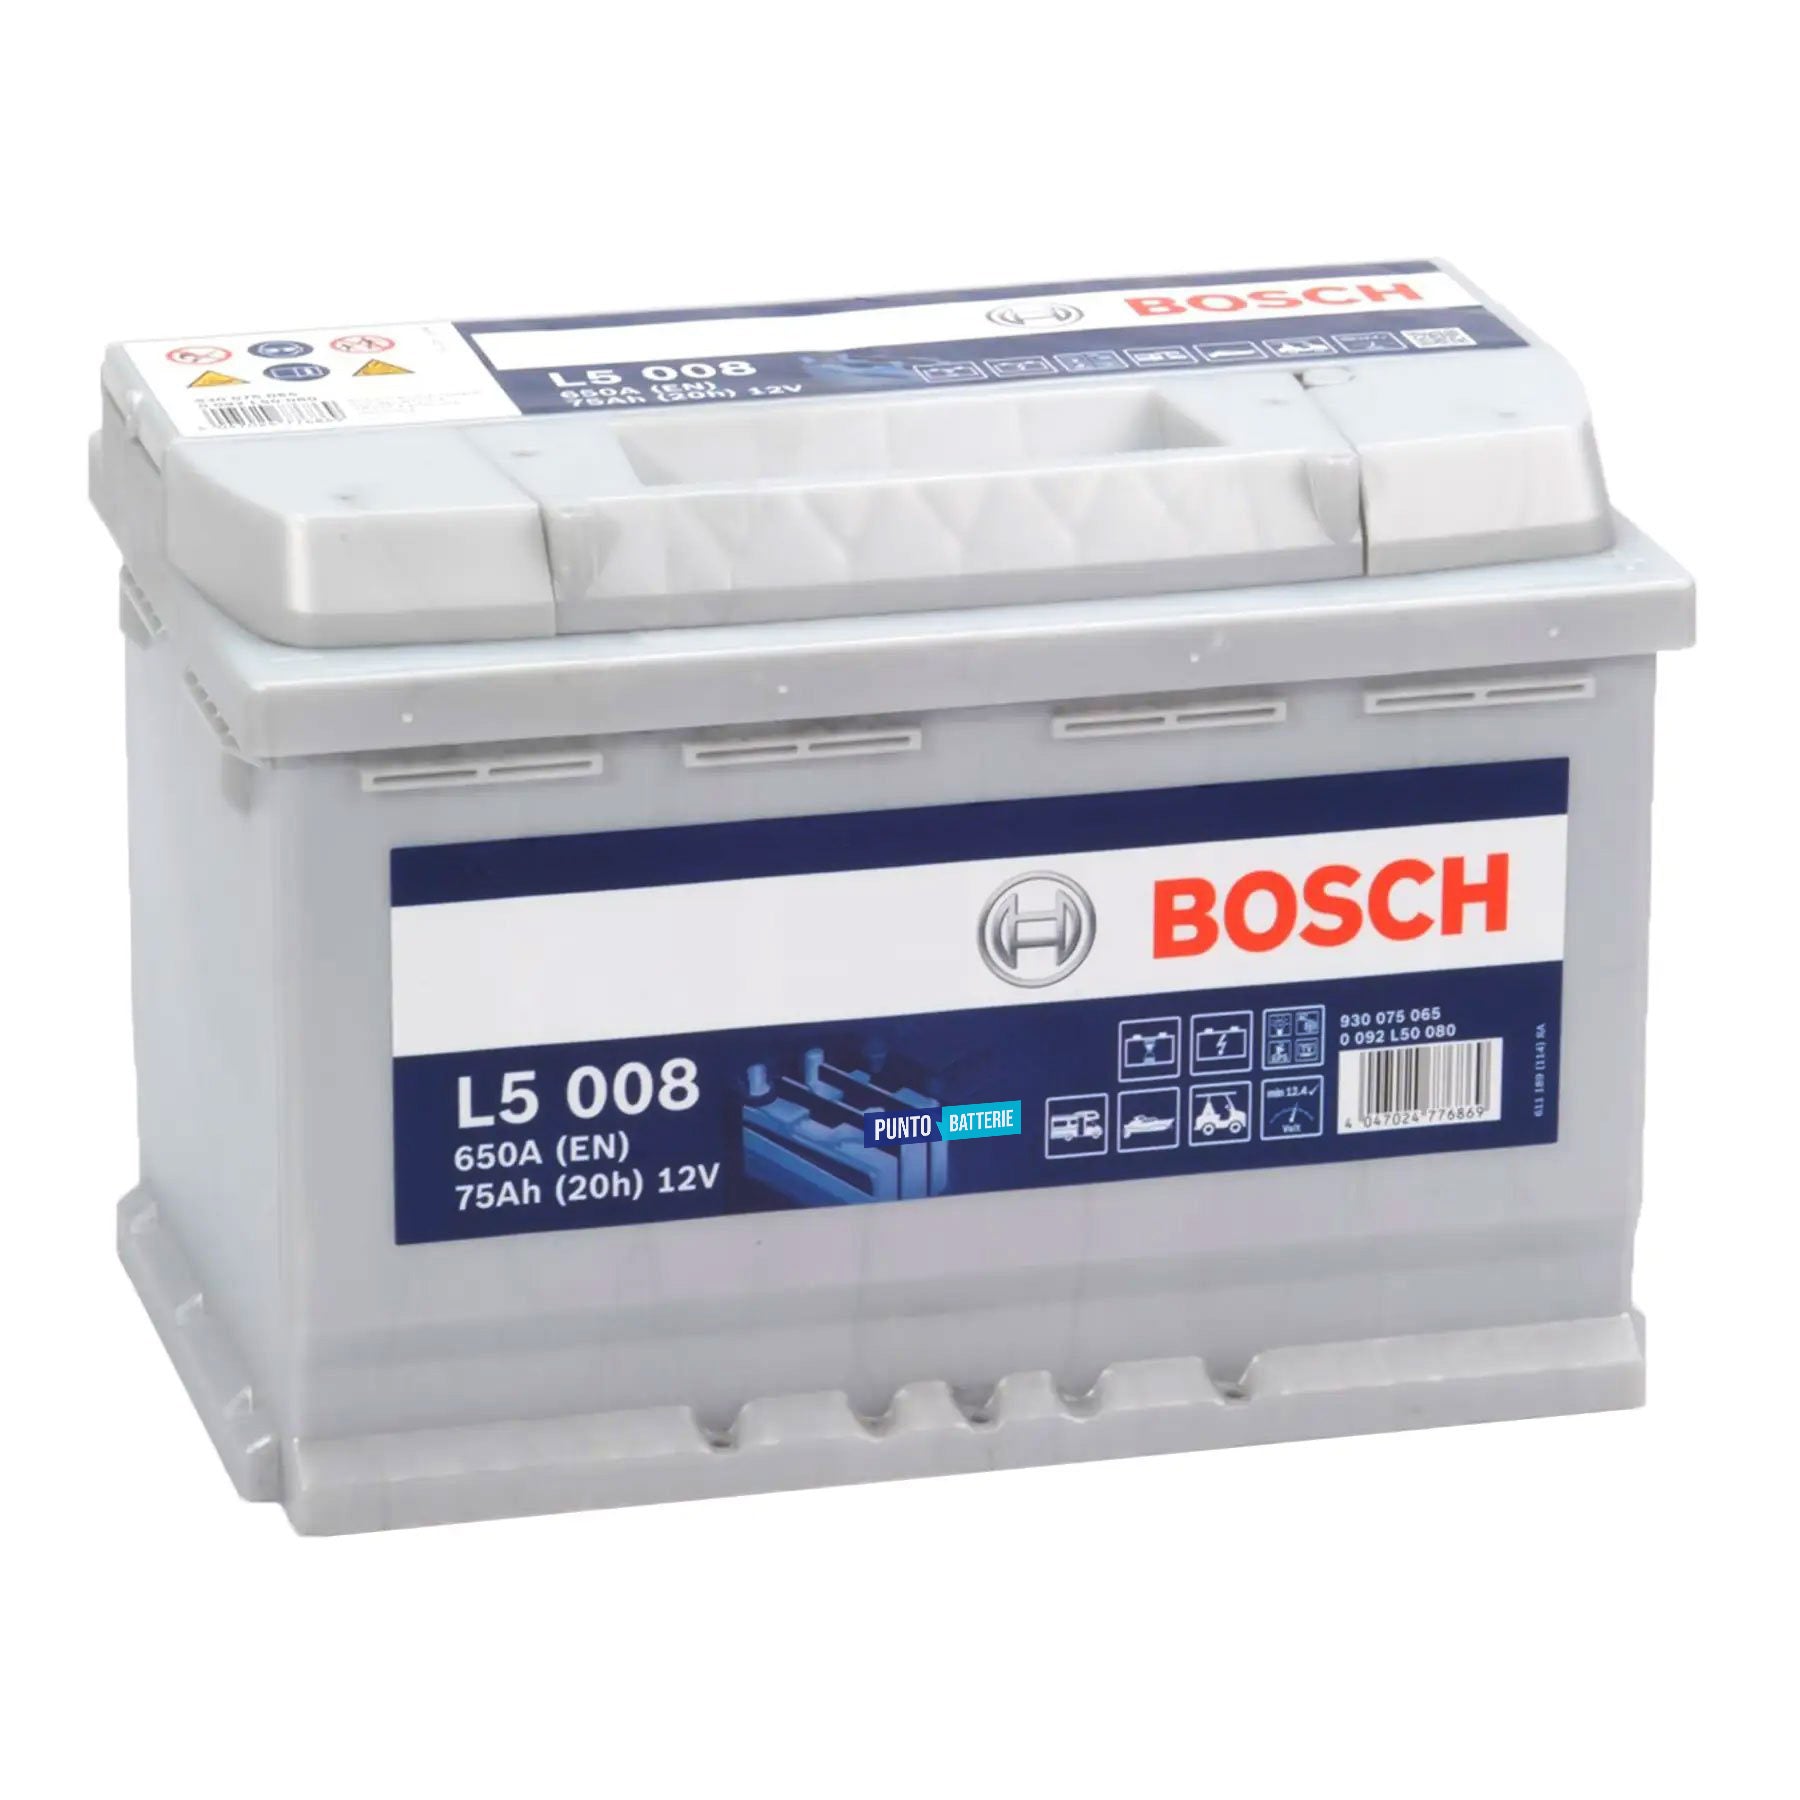 Batteria originale Bosch L5 L5 008, dimensioni 278 x 175 x 190, 12 volt, 75 amperora. Batteria per servizi di camper, barca e applicazioni a scarica lenta.